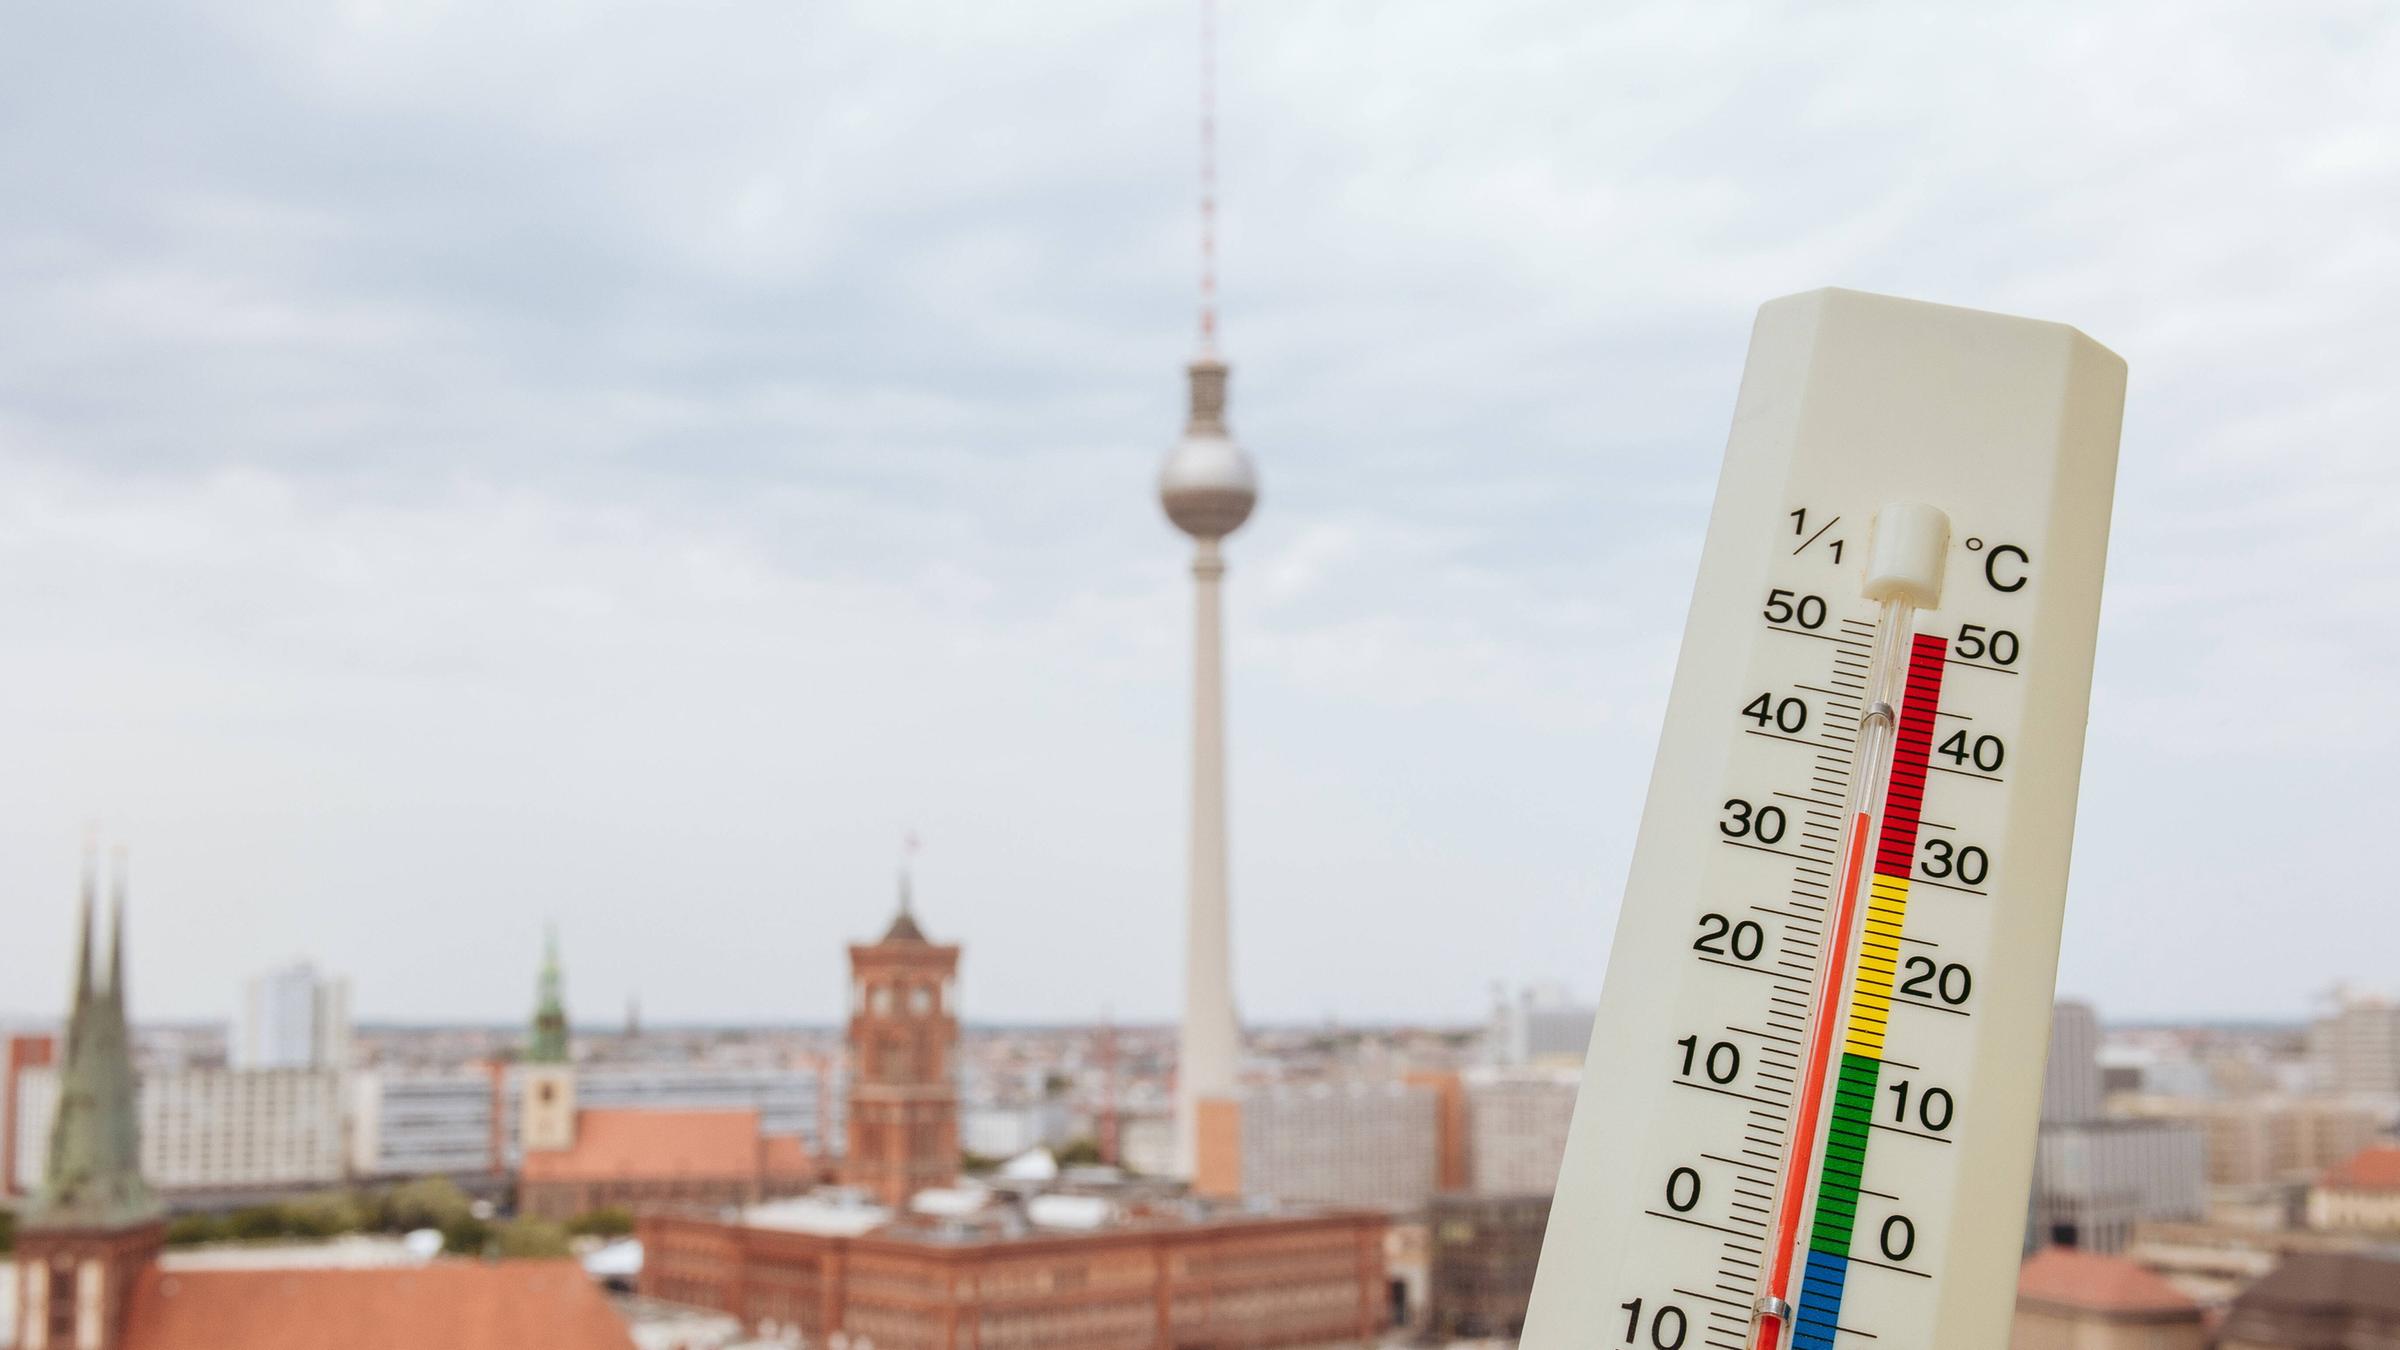 Hitze in Berlin. Thermometer bei 35 Grad Celsius im Zentrum von Berlin Mitte. 19.06.2022